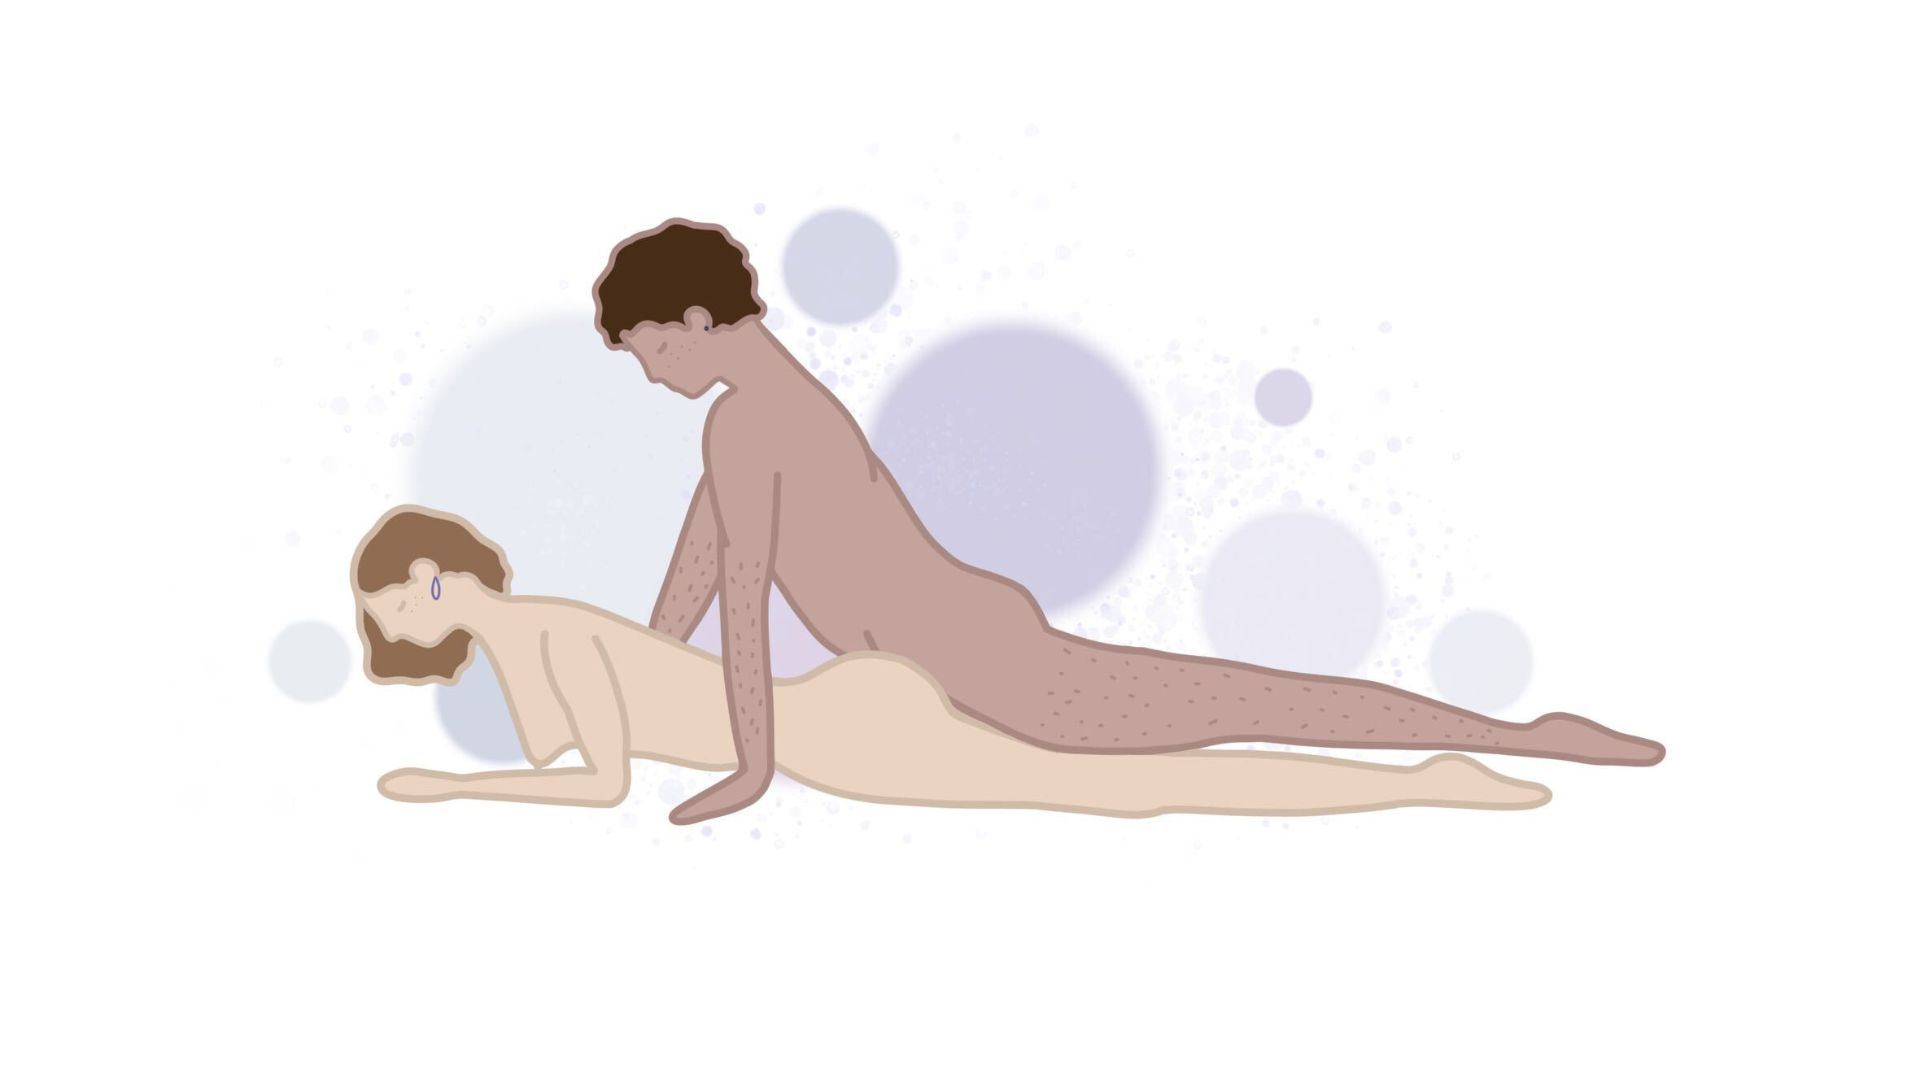 donald puetz share prone bone sex position photos